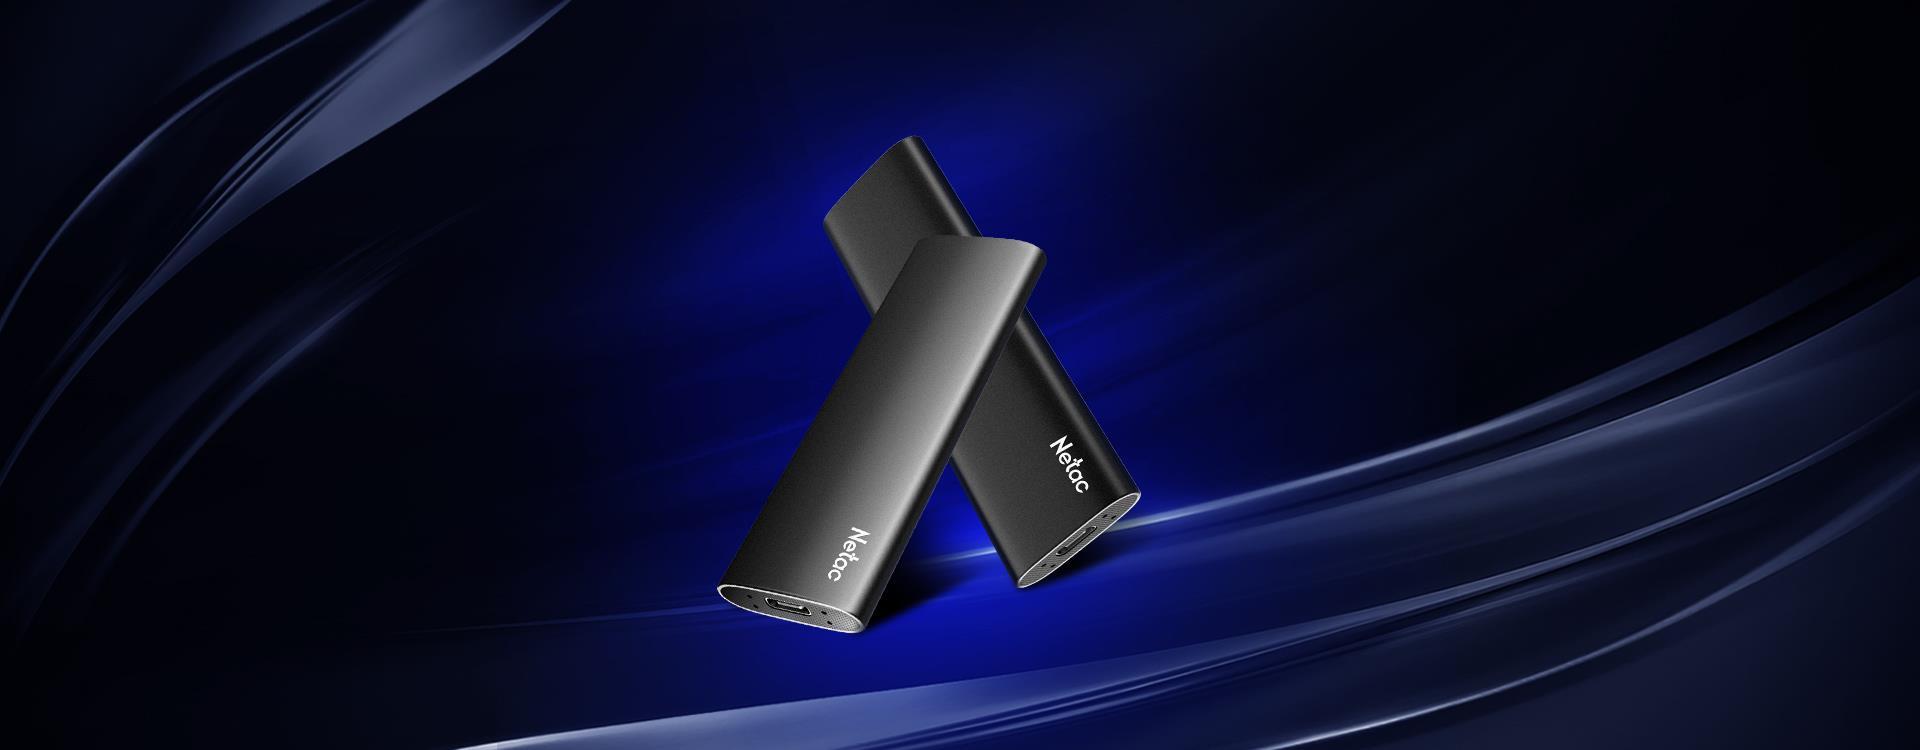 Disque dur externe SSD slim NETAC 250 GO